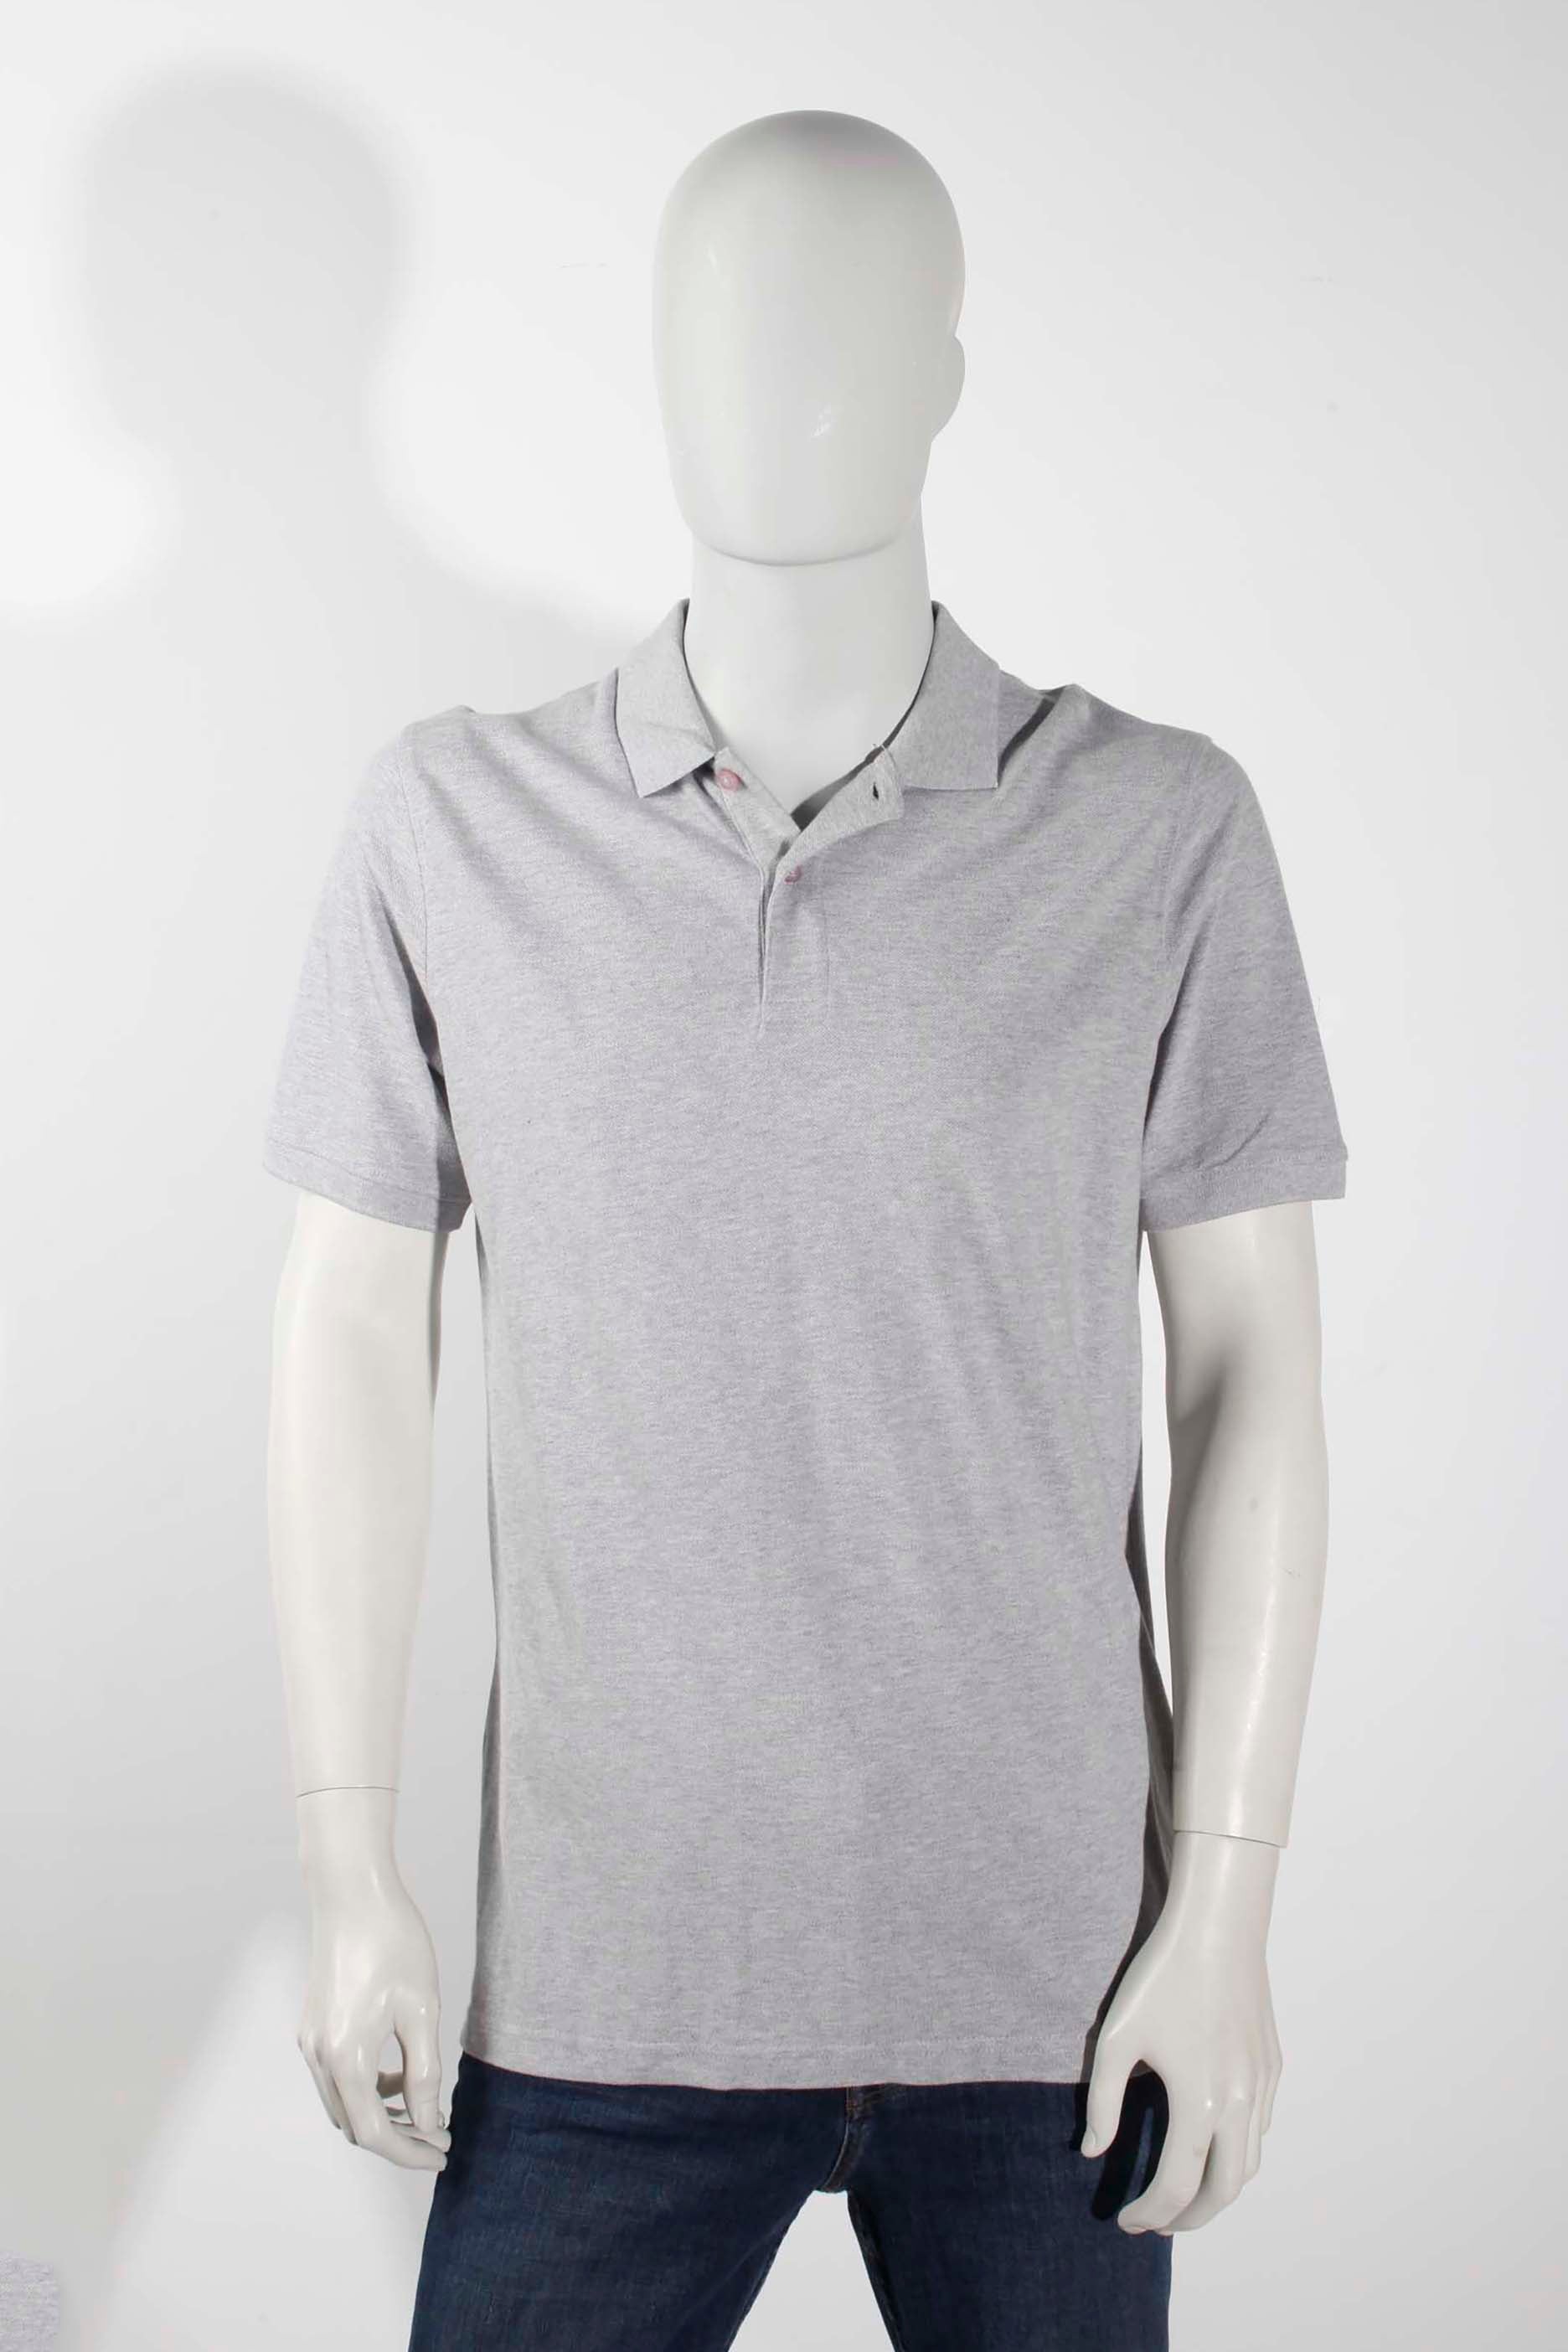 Mens Light Grey Polo Shirt (Medium)